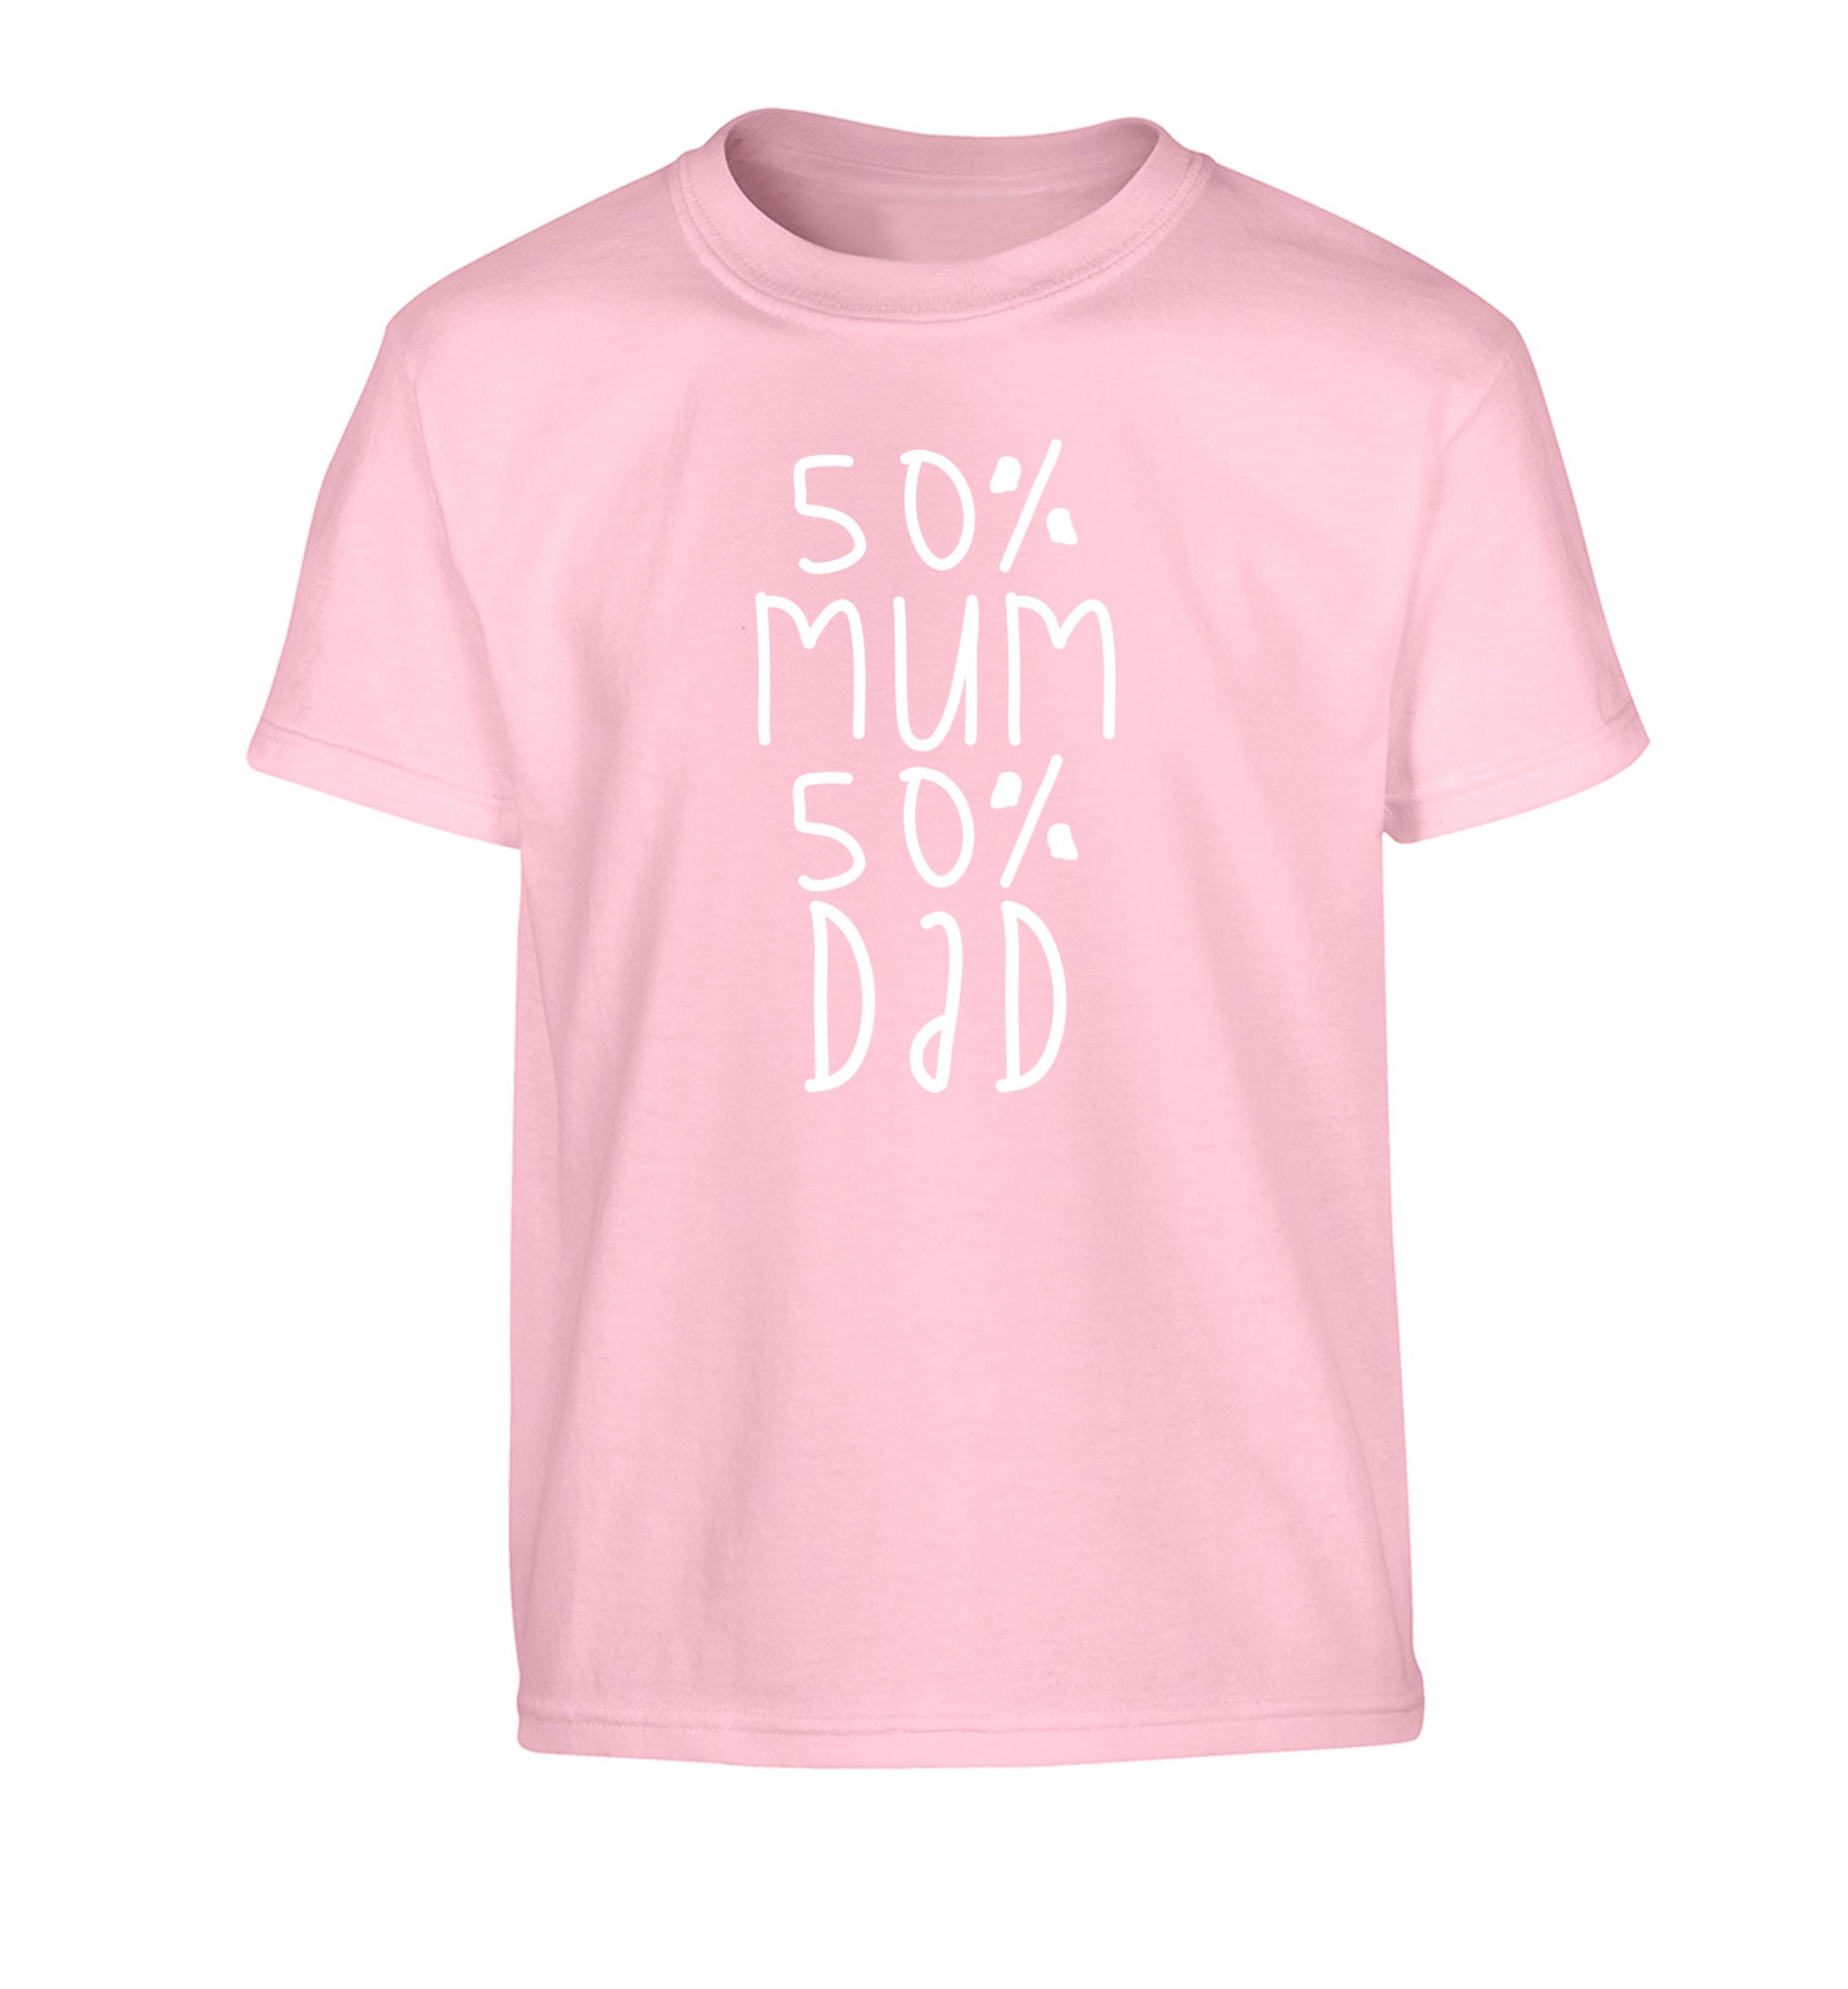 50% mum 50% dad Children's light pink Tshirt 12-14 Years